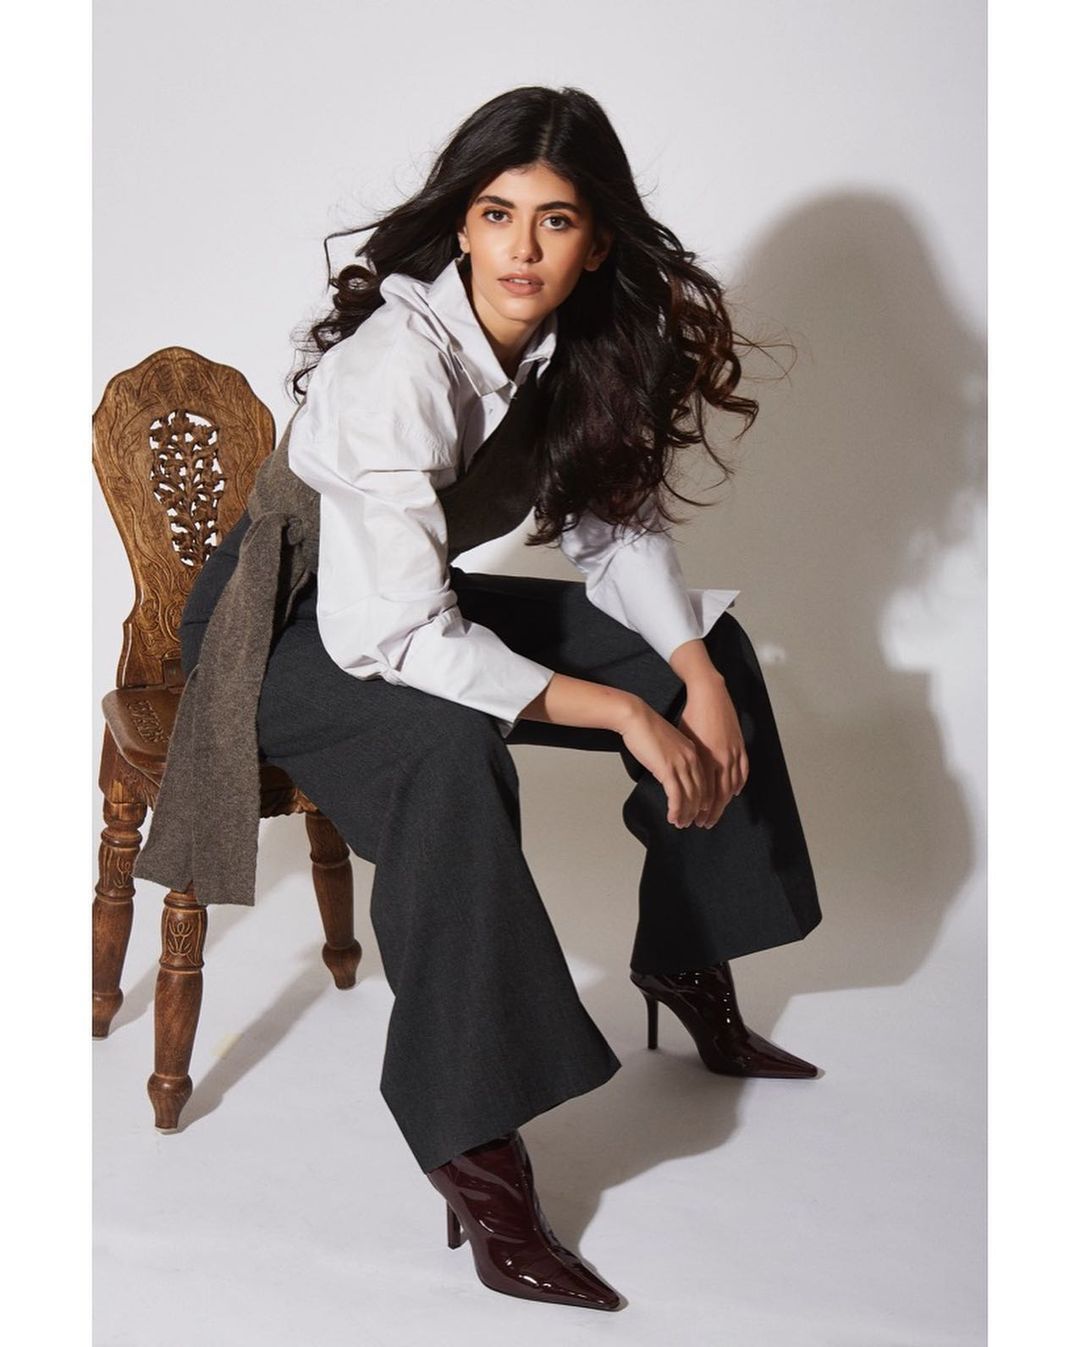 Sanjana Sanghi looks powerful in the pantsuit.